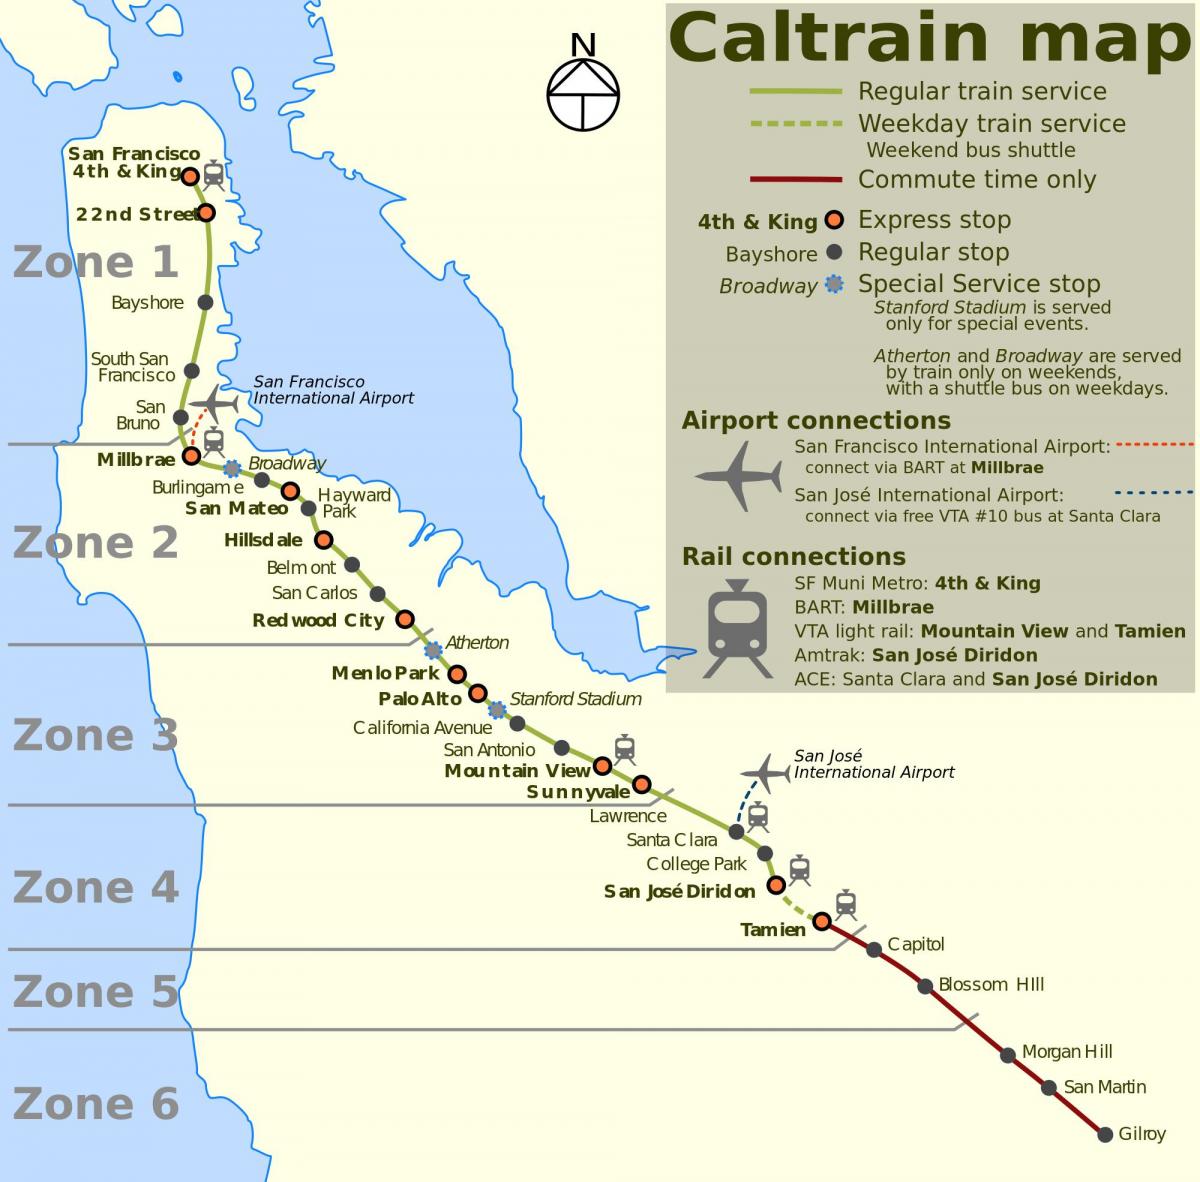 San Francisco caltrain kart